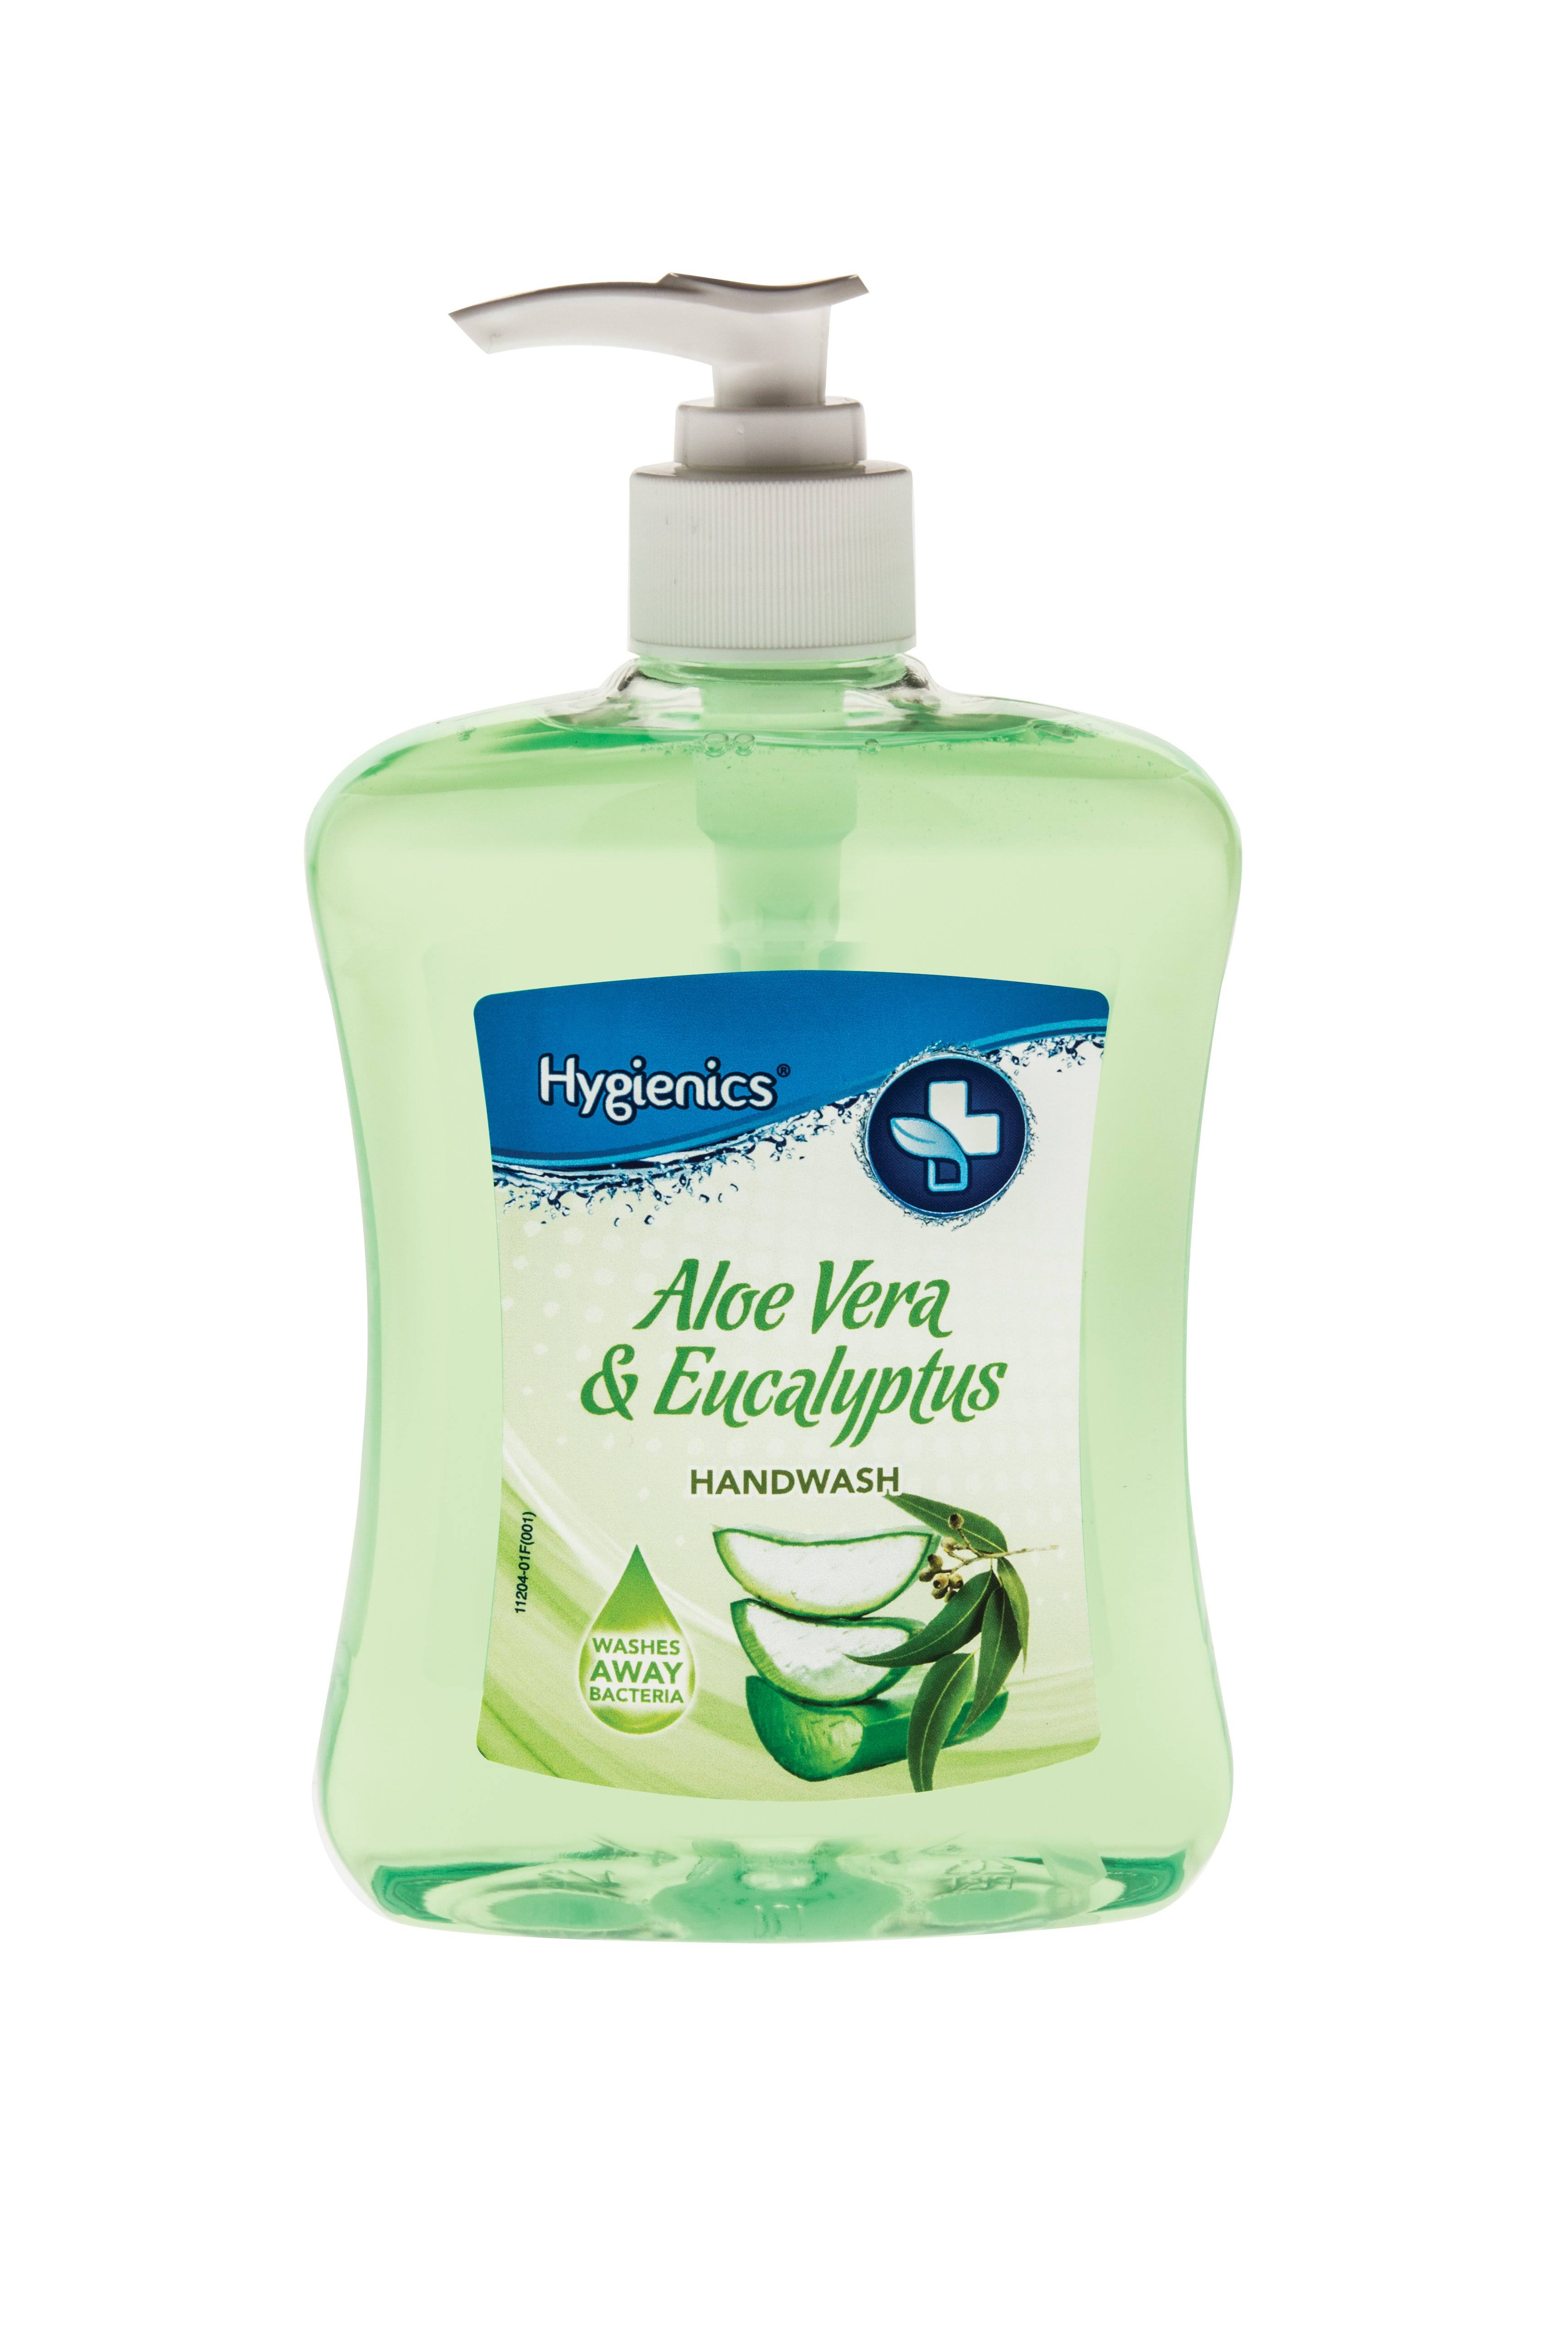 Hygienics Handwash - Aloe Vera & Eucalyptus, 500ml